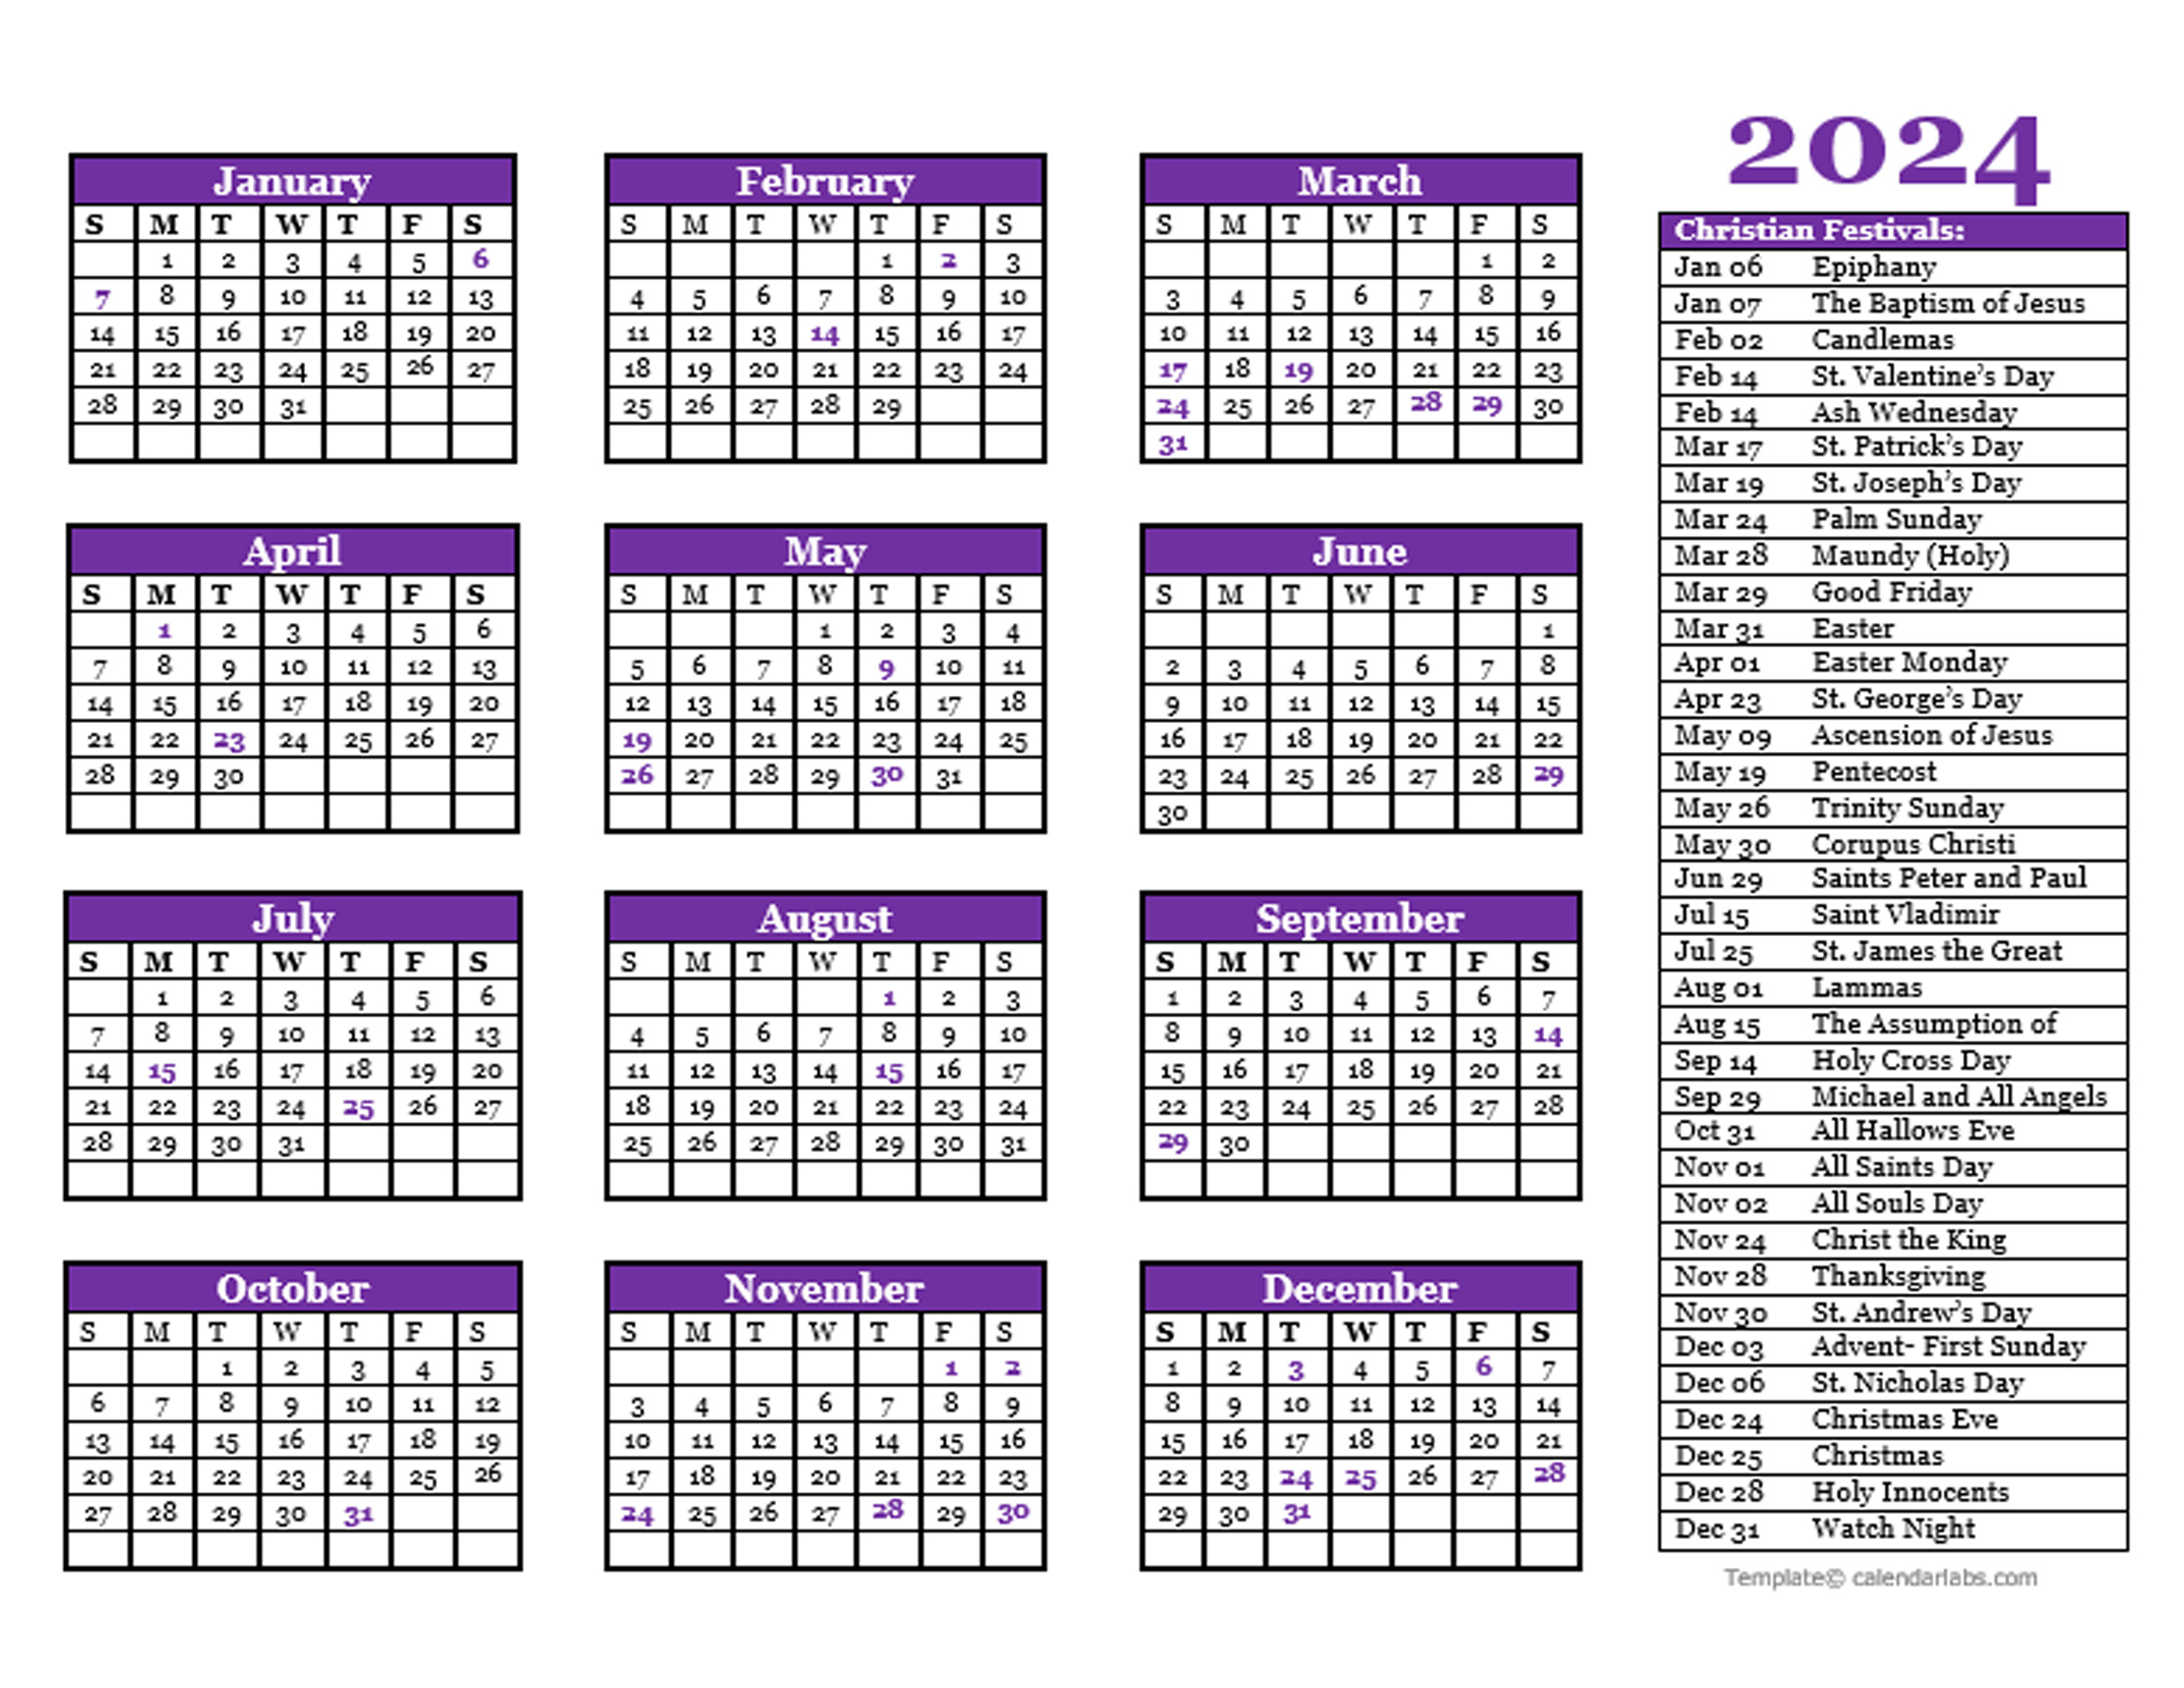 2024 Christian Festivals Calendar Template - Free Printable Templates